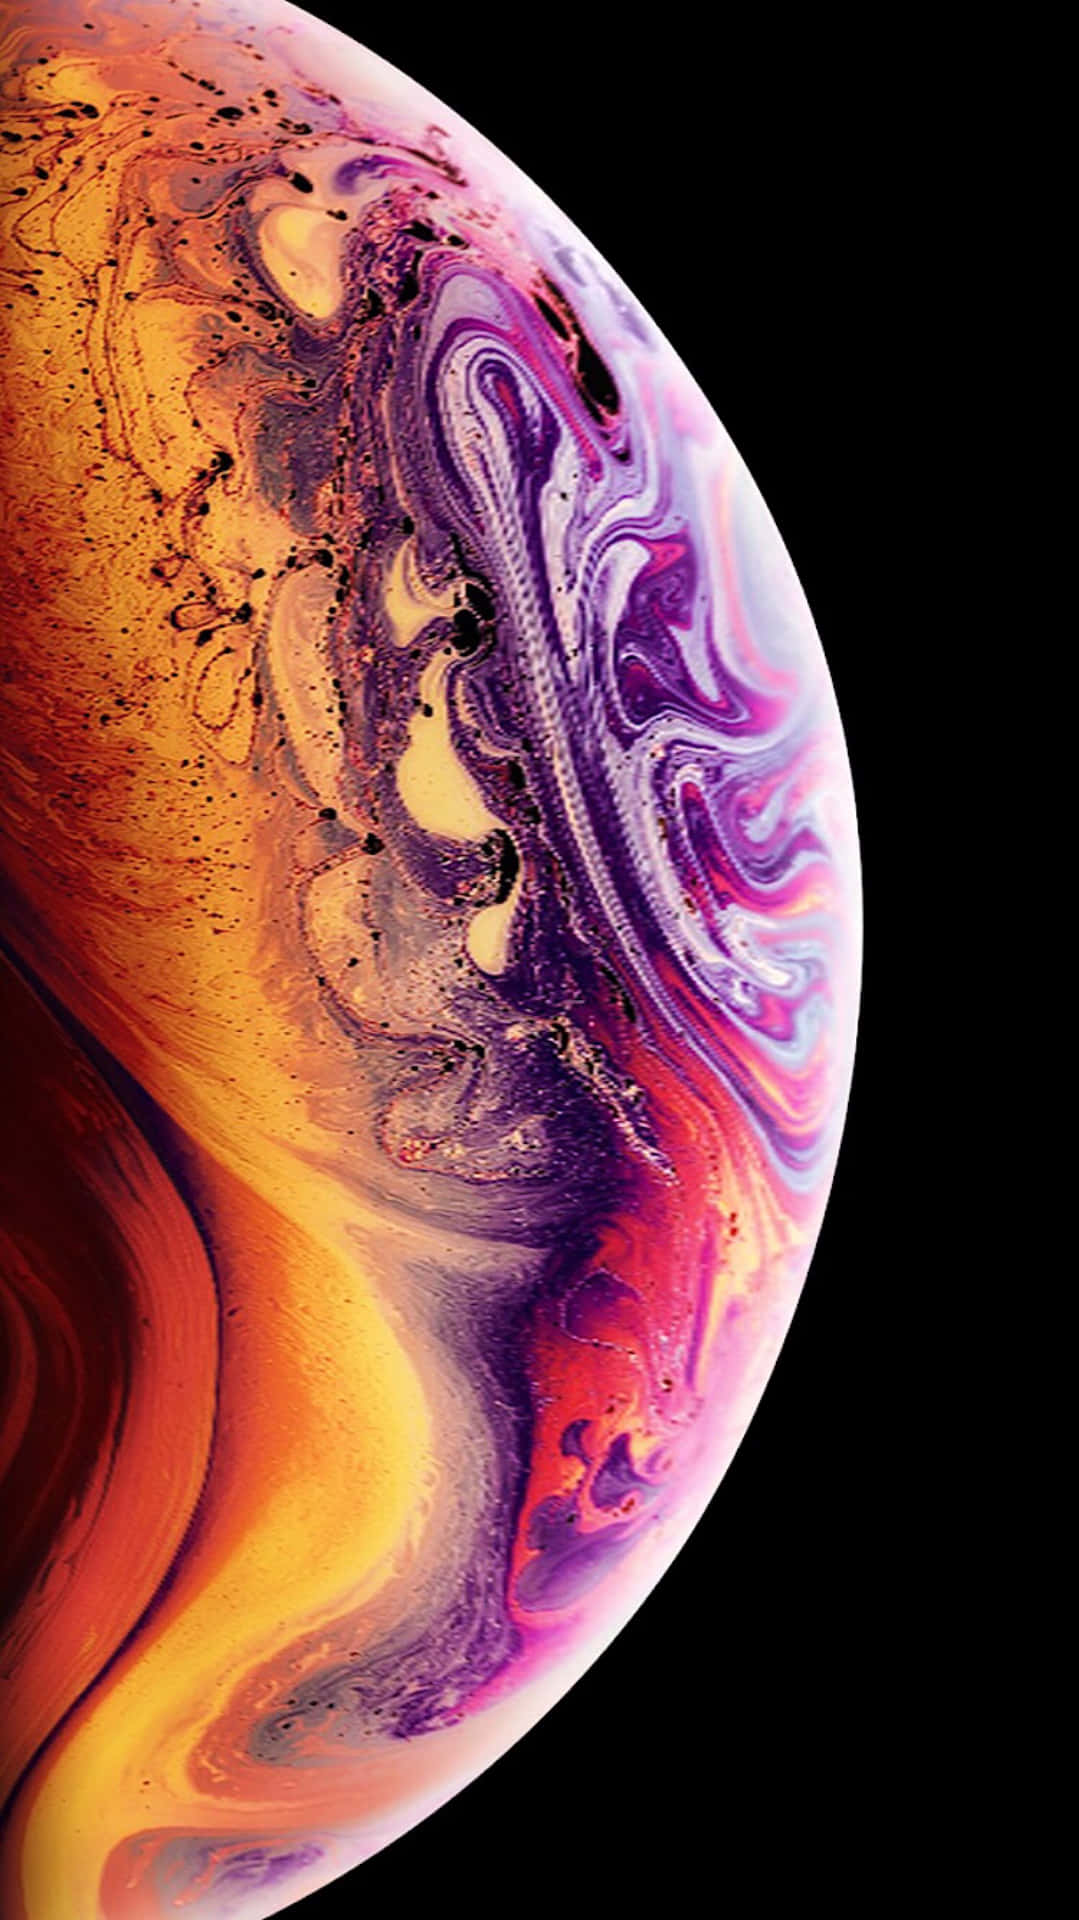 Oil Puddle iPhone 6s Default Wallpaper